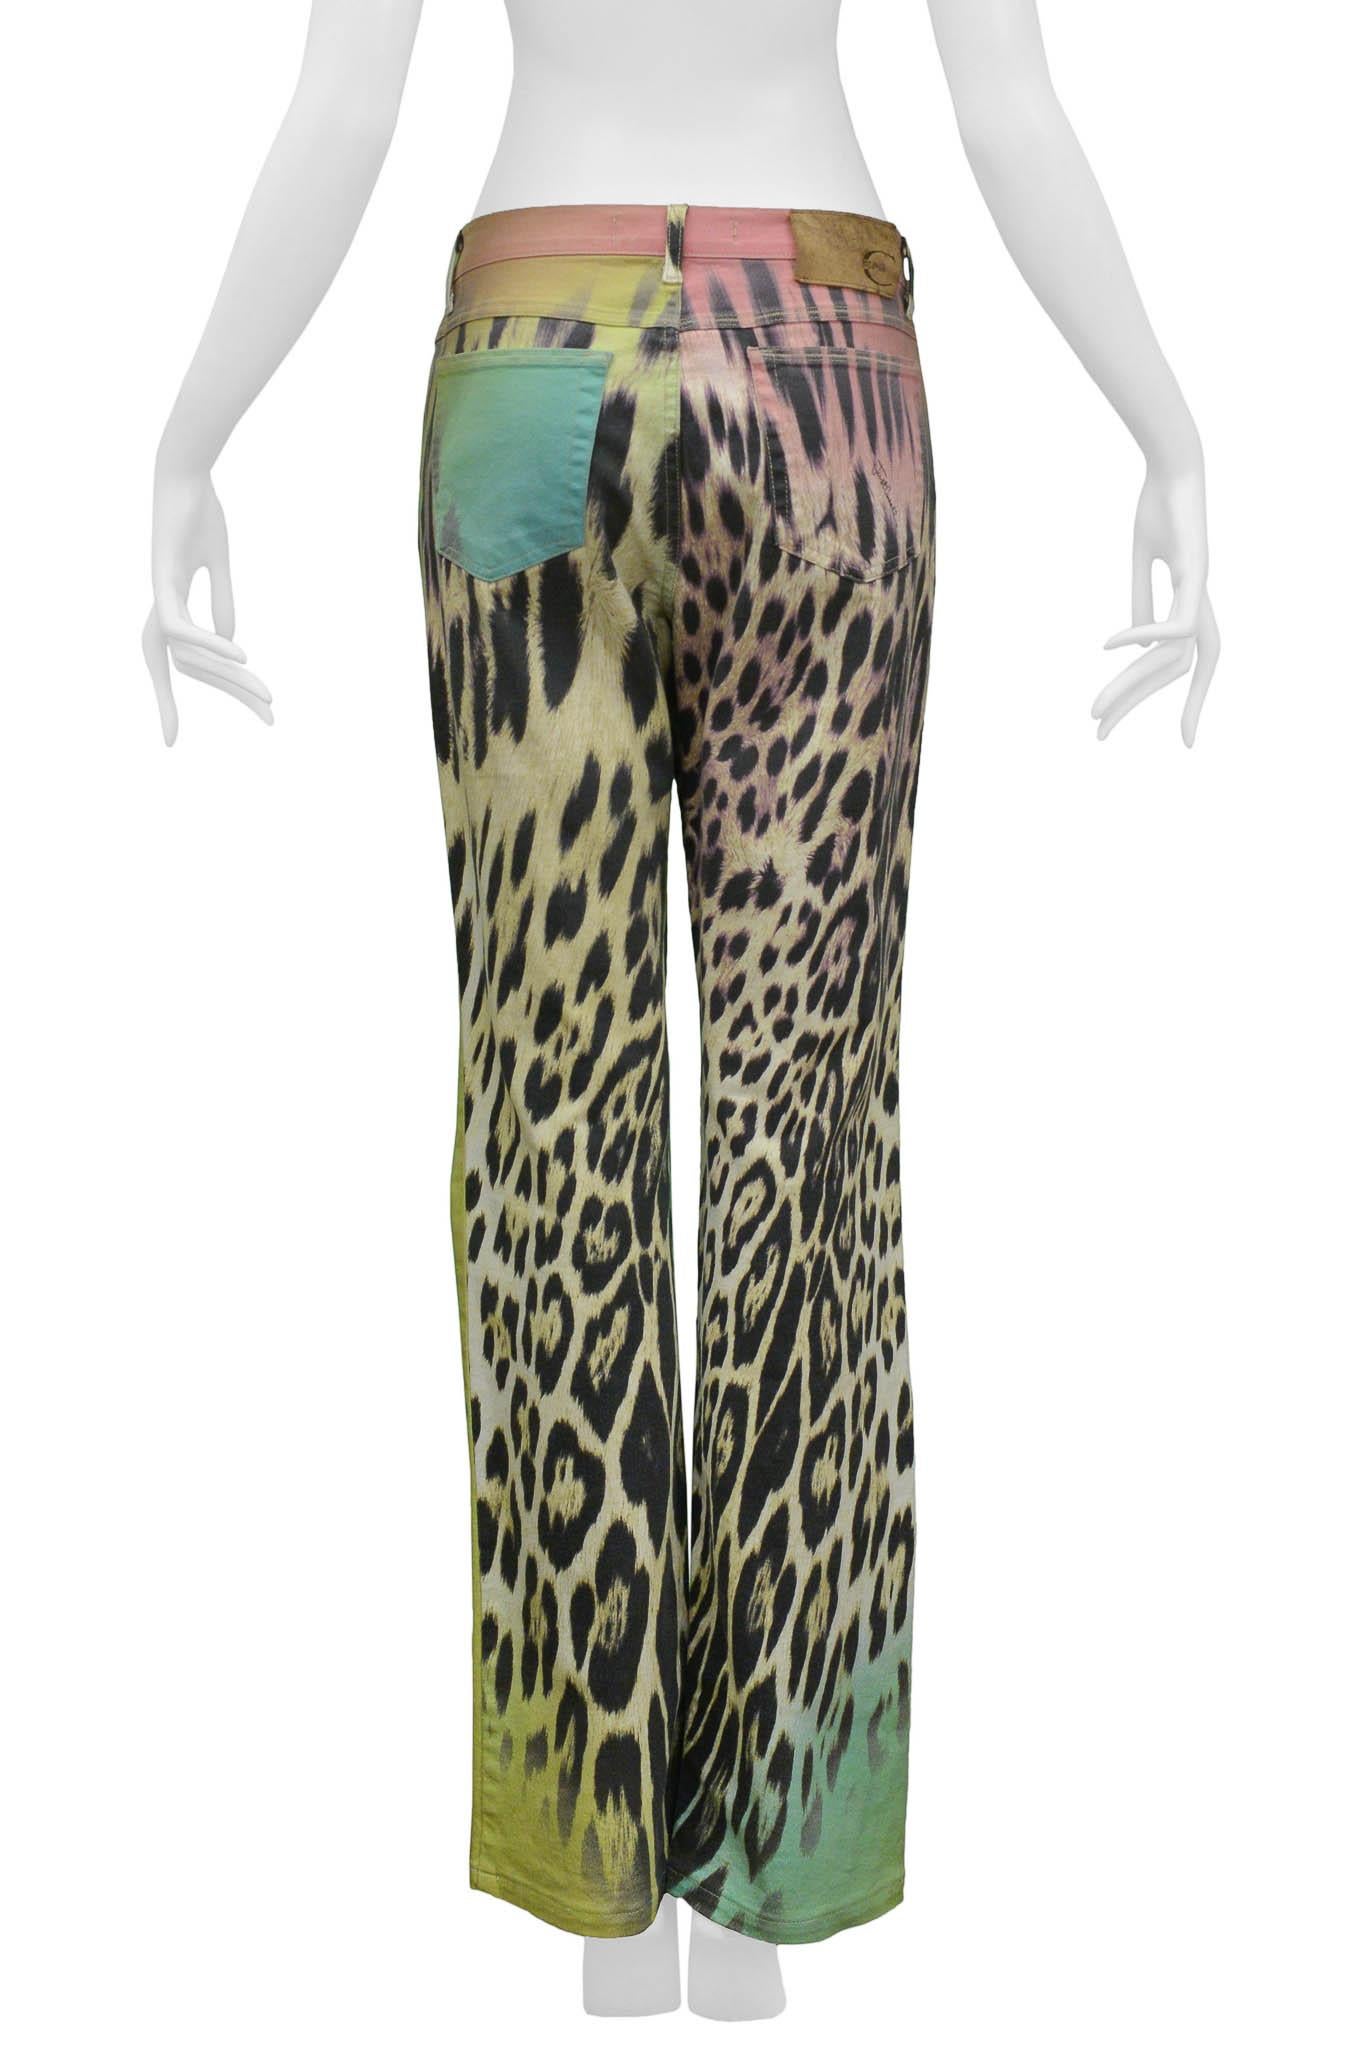 Roberto Cavalli Rainbow Leopard Print Pants In Excellent Condition In Los Angeles, CA